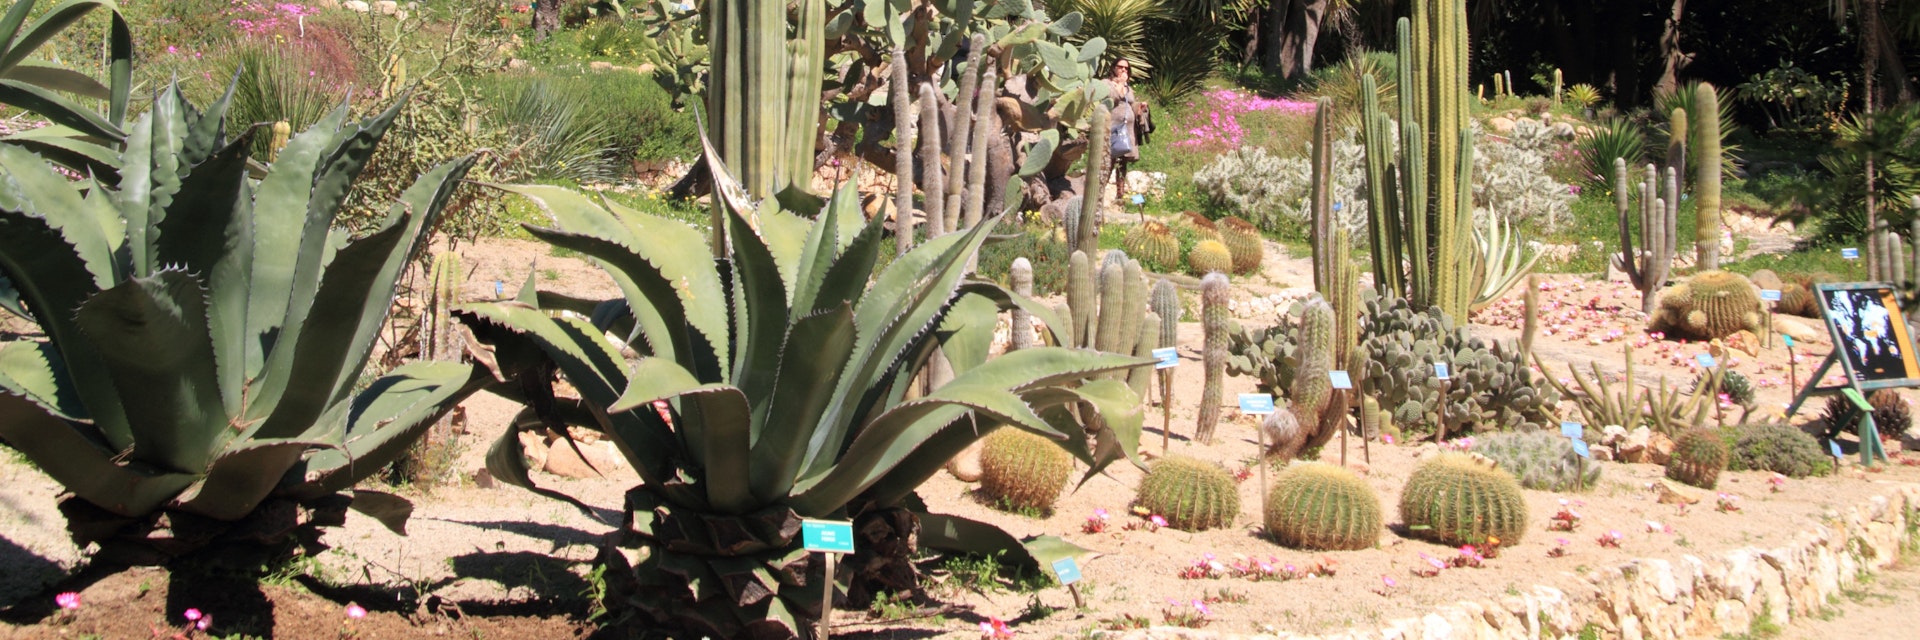 Cacti in Orto Botanico botanical gardens.